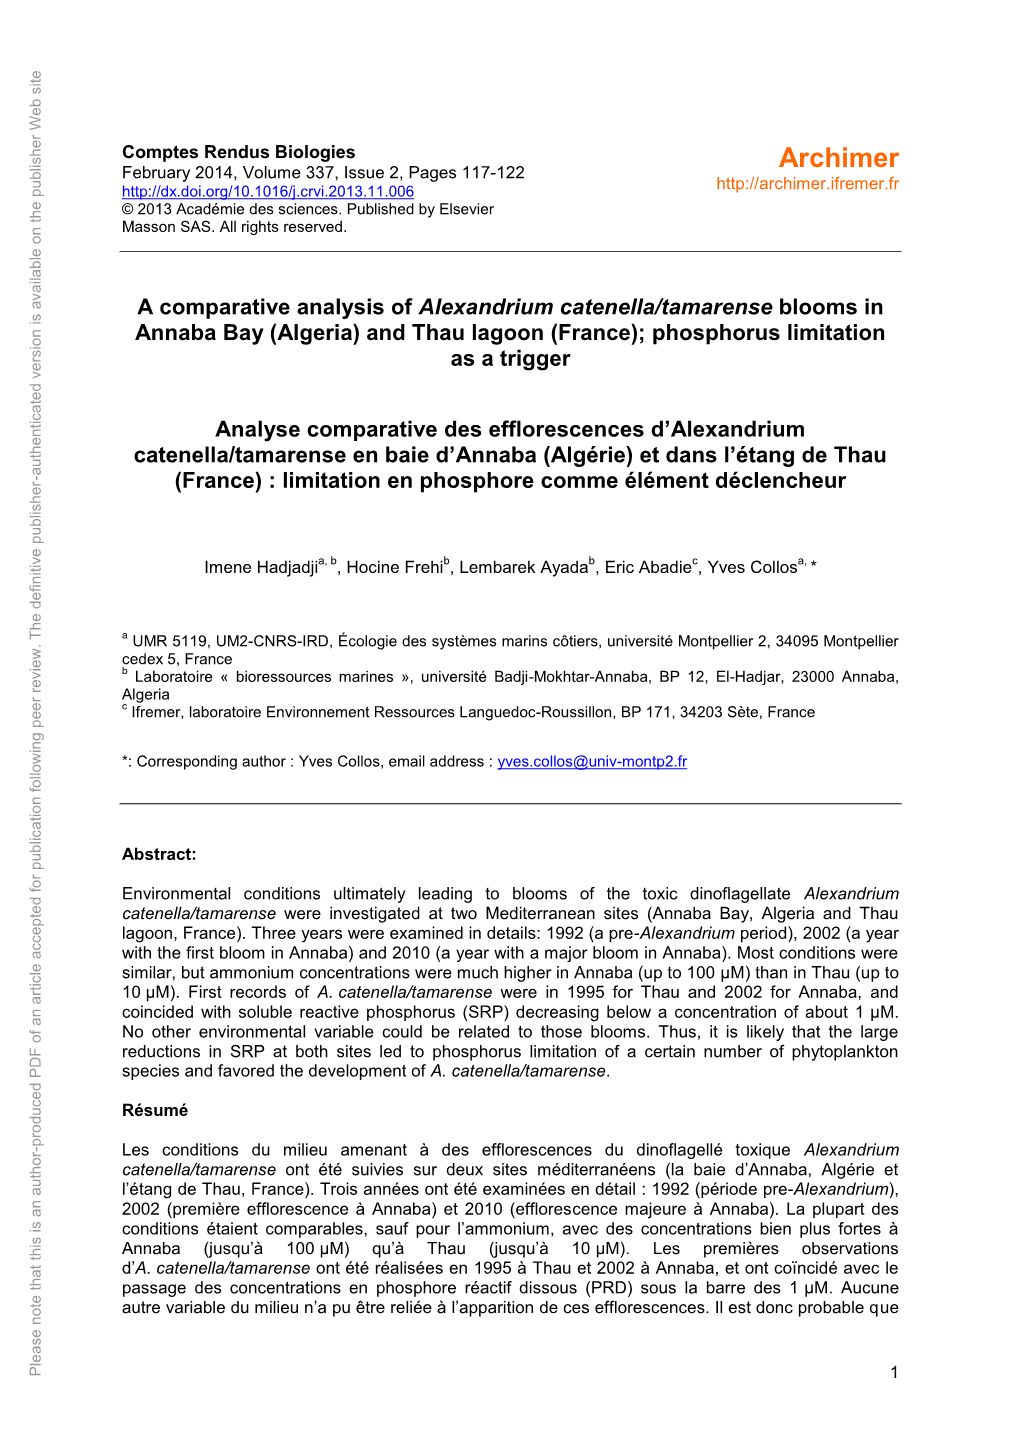 A Comparative Analysis of Alexandrium Catenella/Tamarense